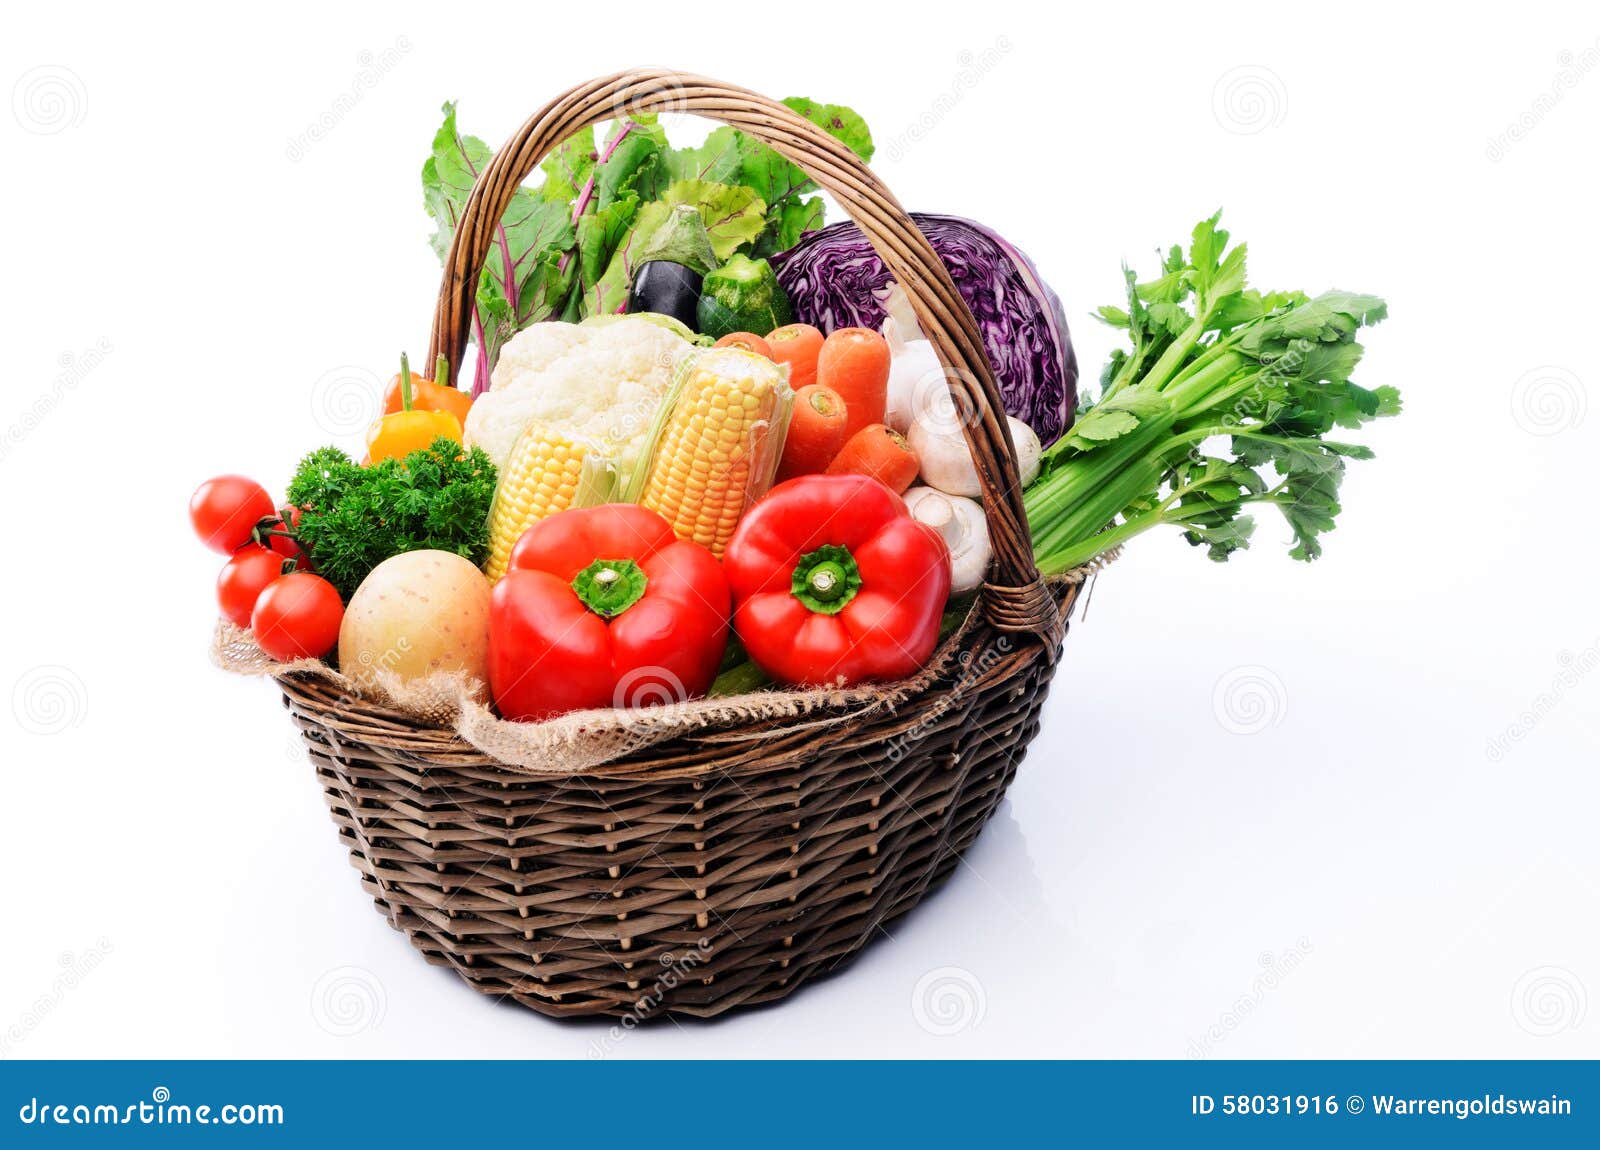 basket of organic fresh produce from farmers market